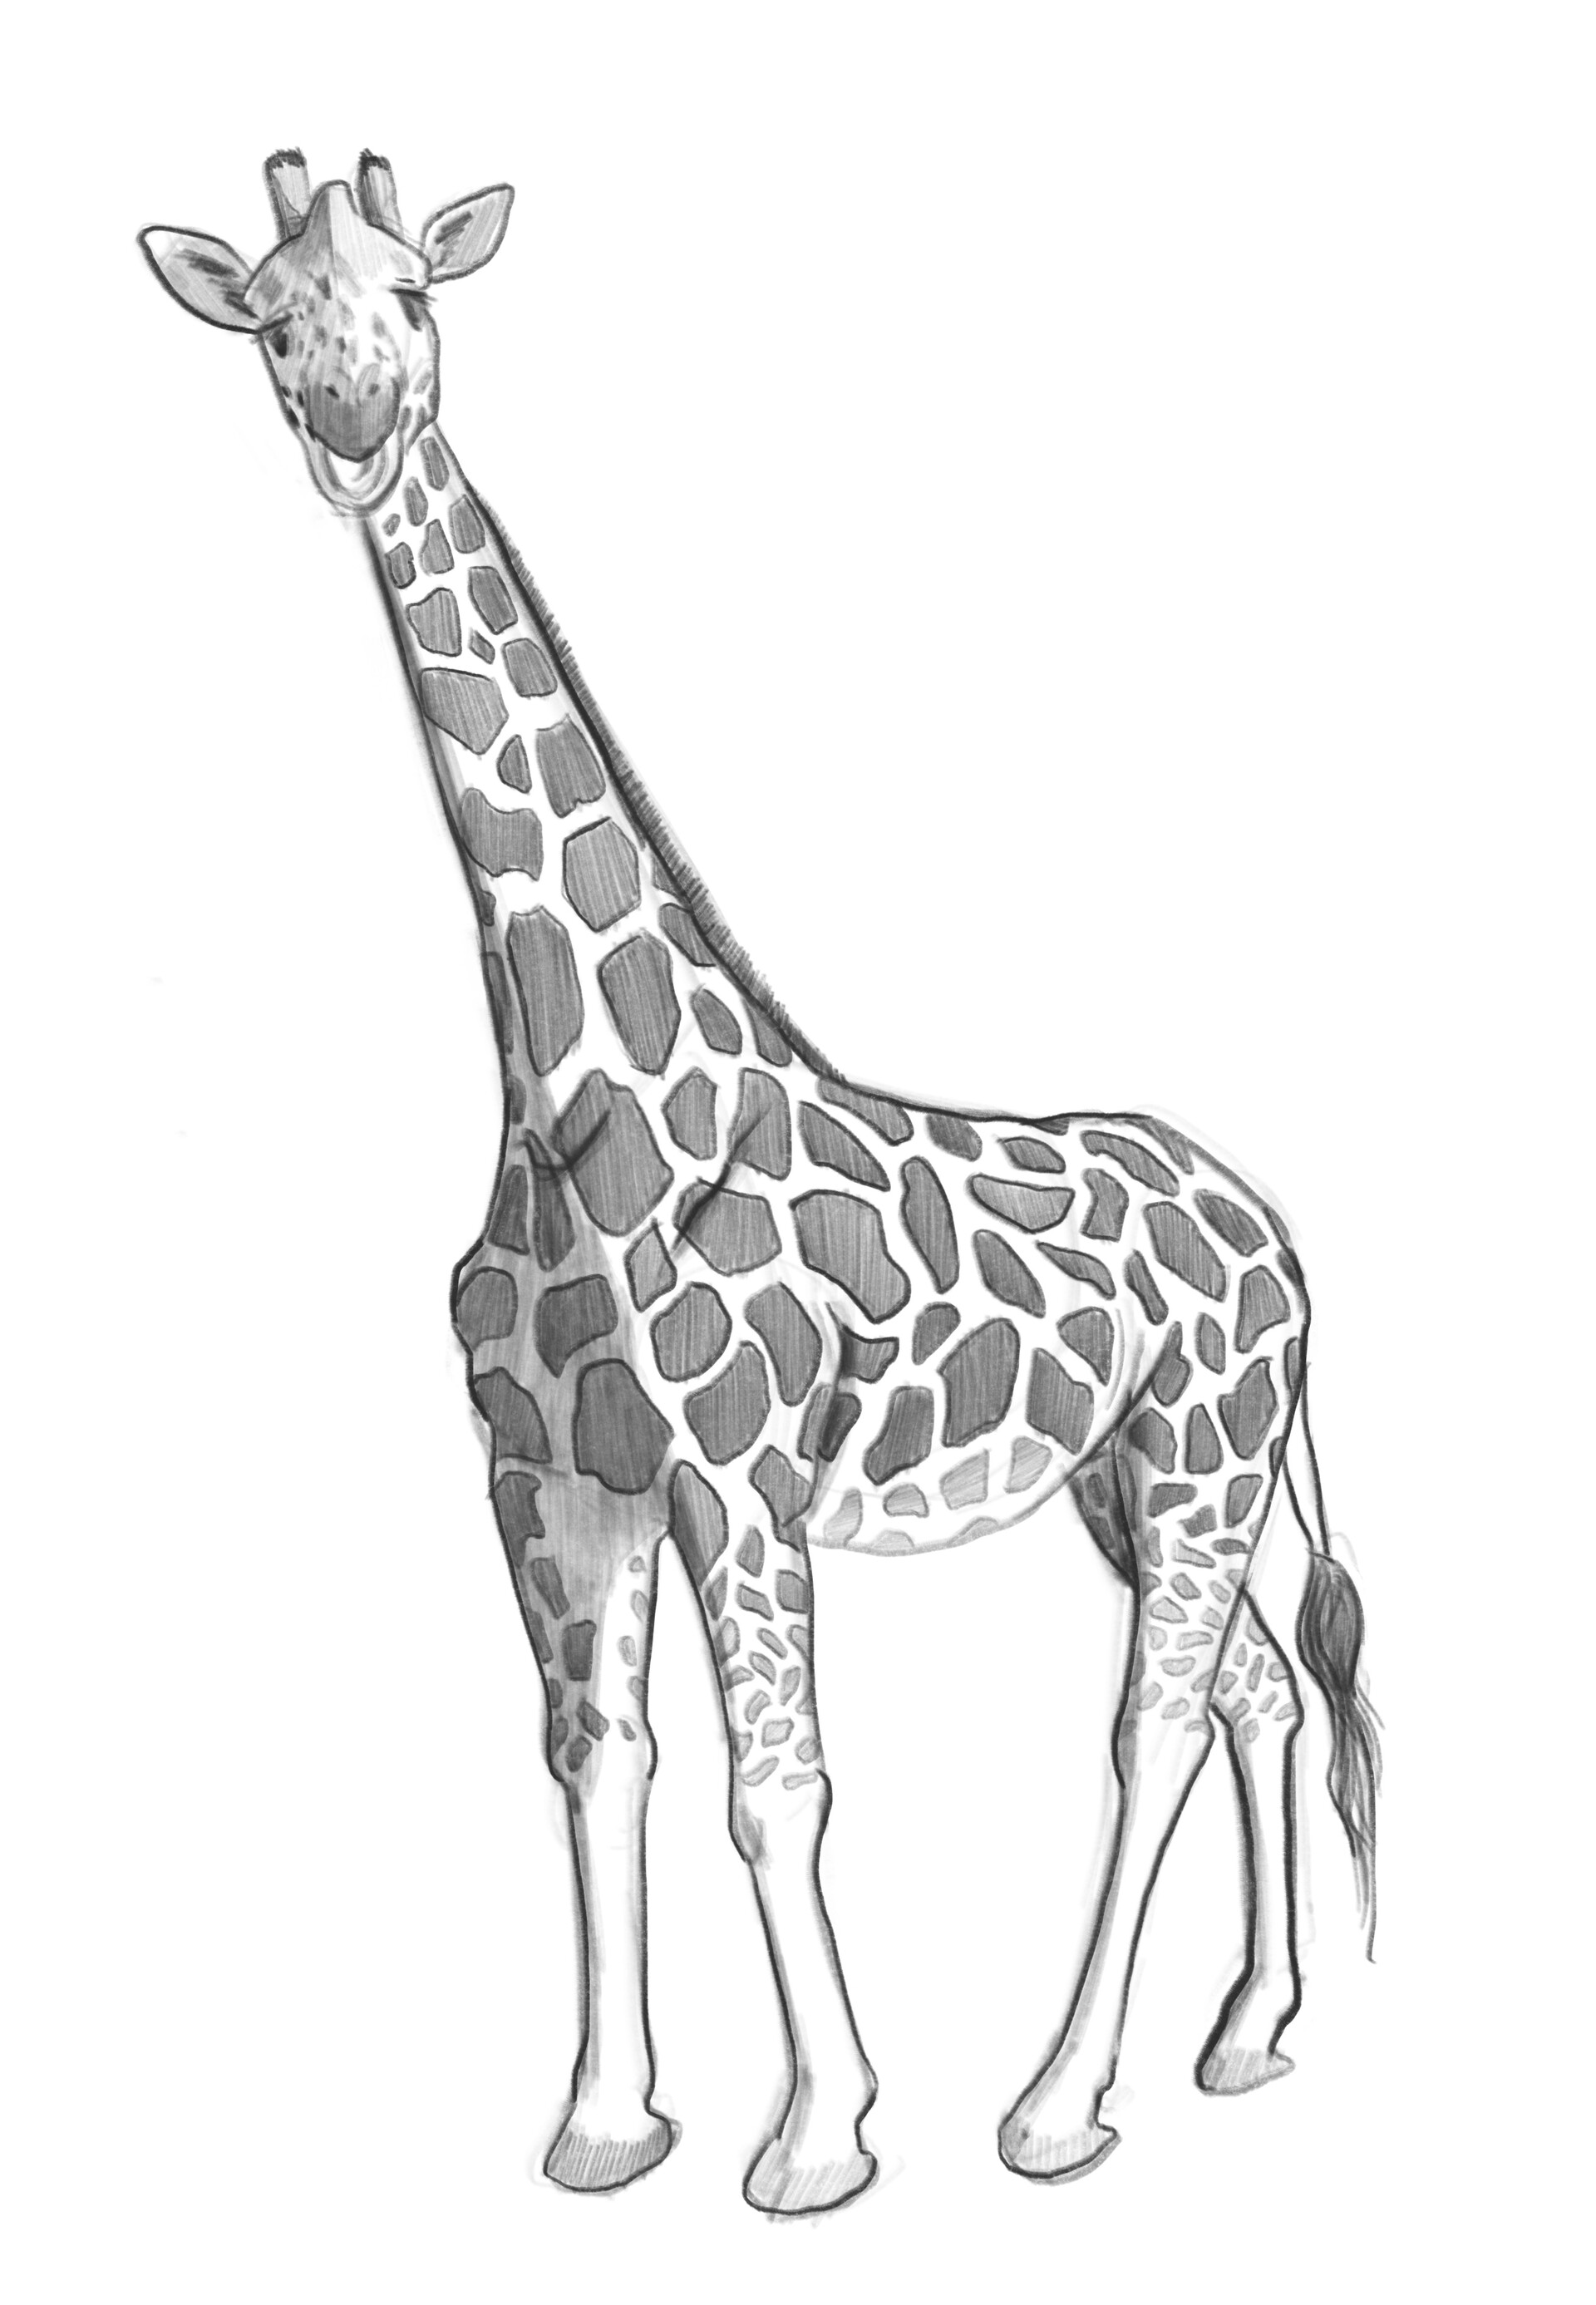 22,598 Giraffe Sketch Images, Stock Photos & Vectors | Shutterstock